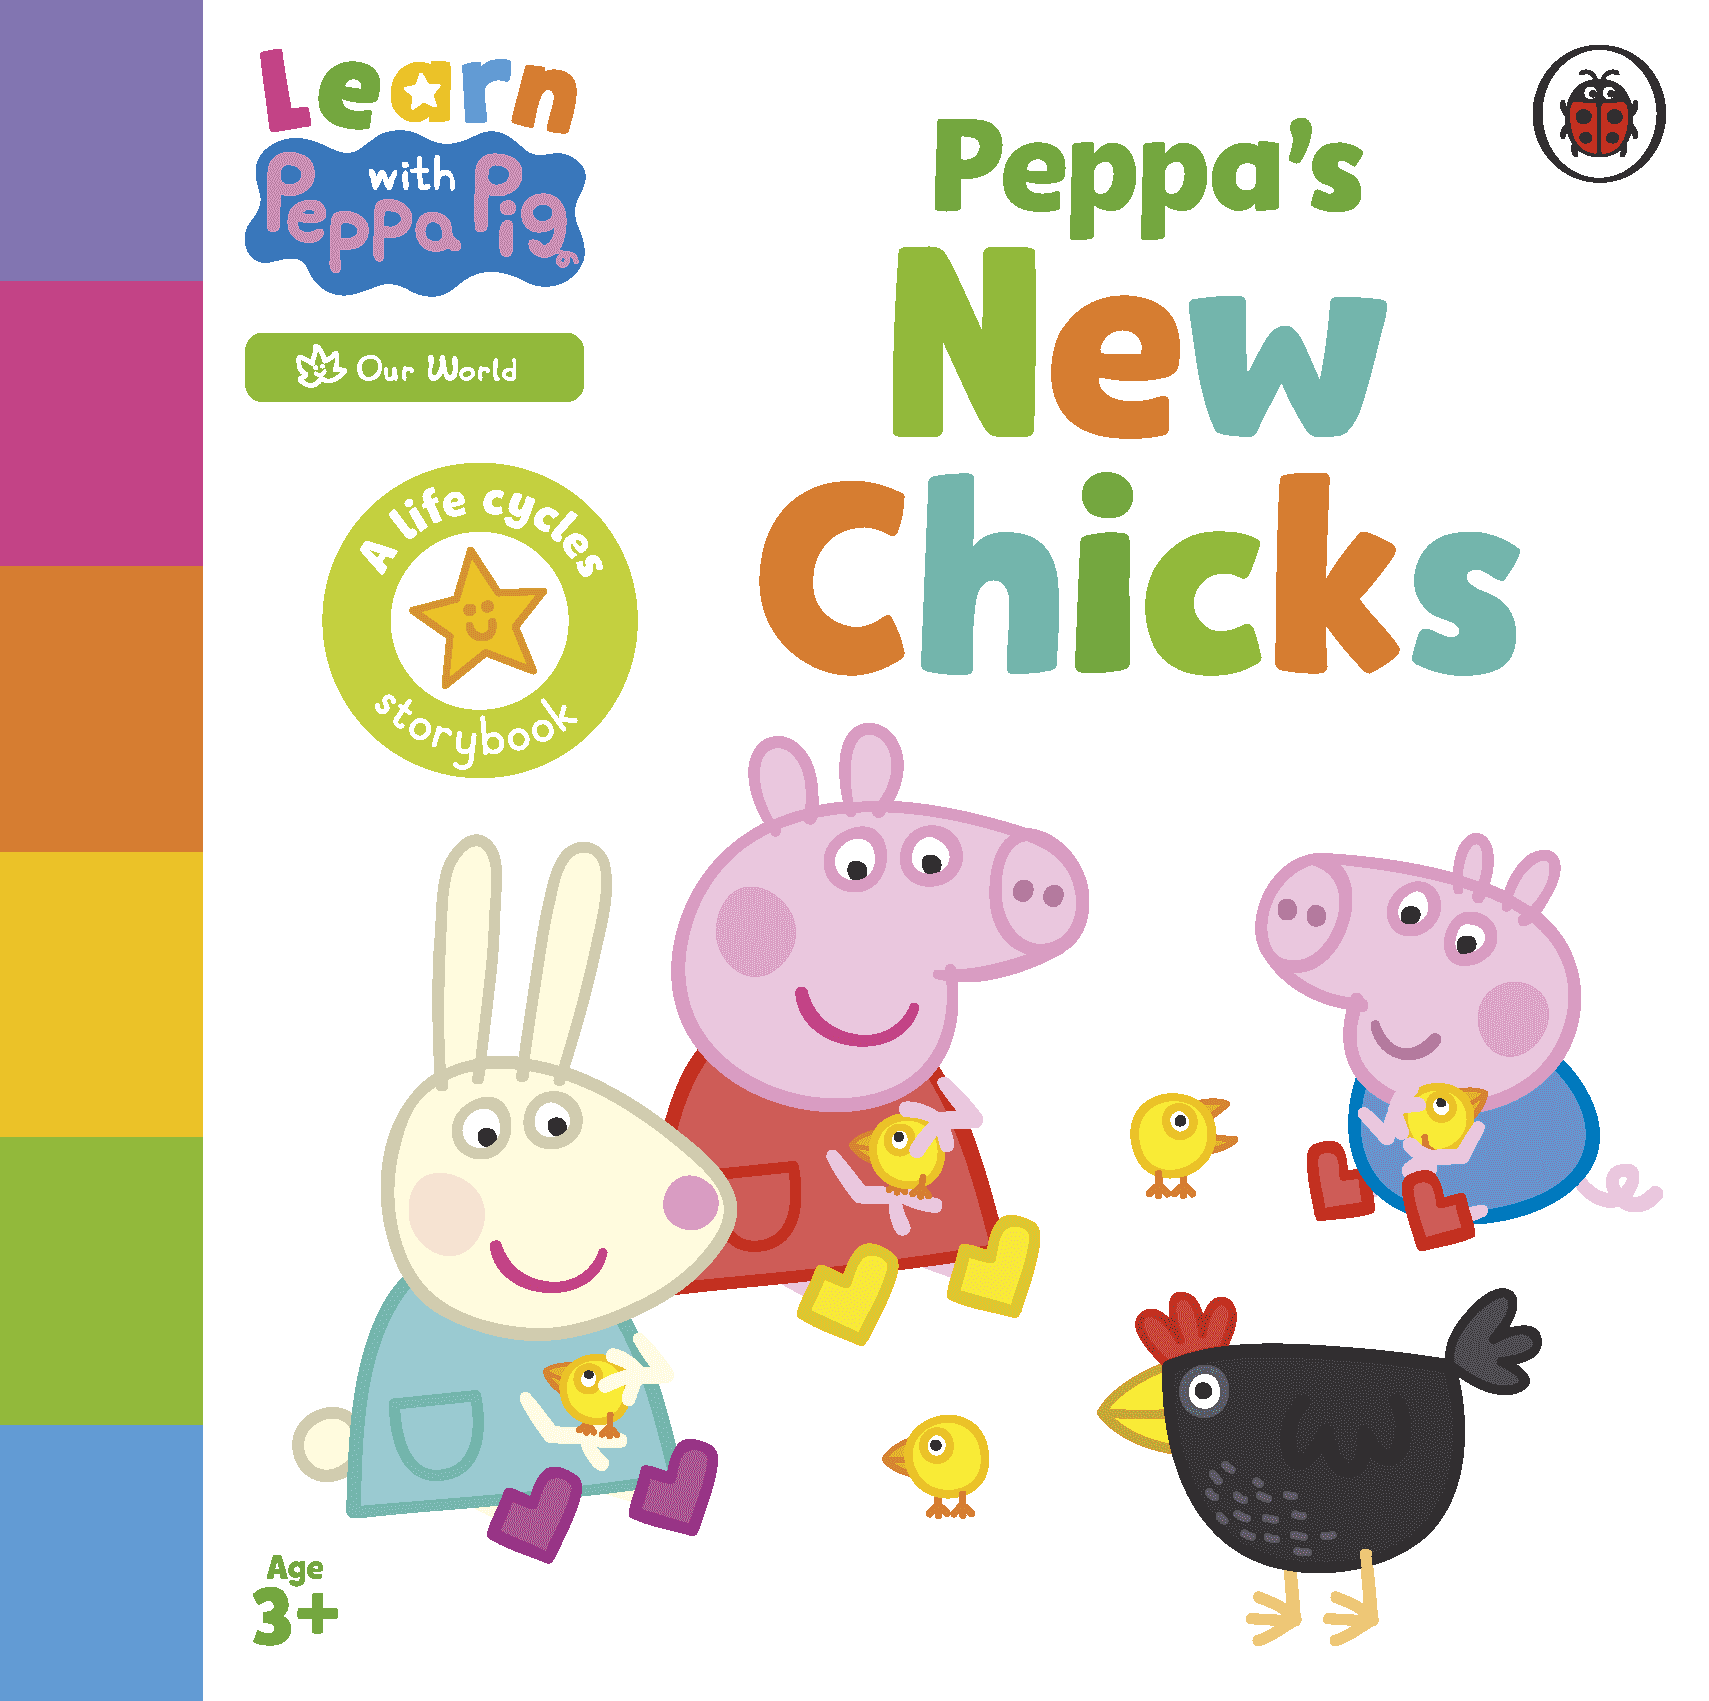 Peppa's New Chicks